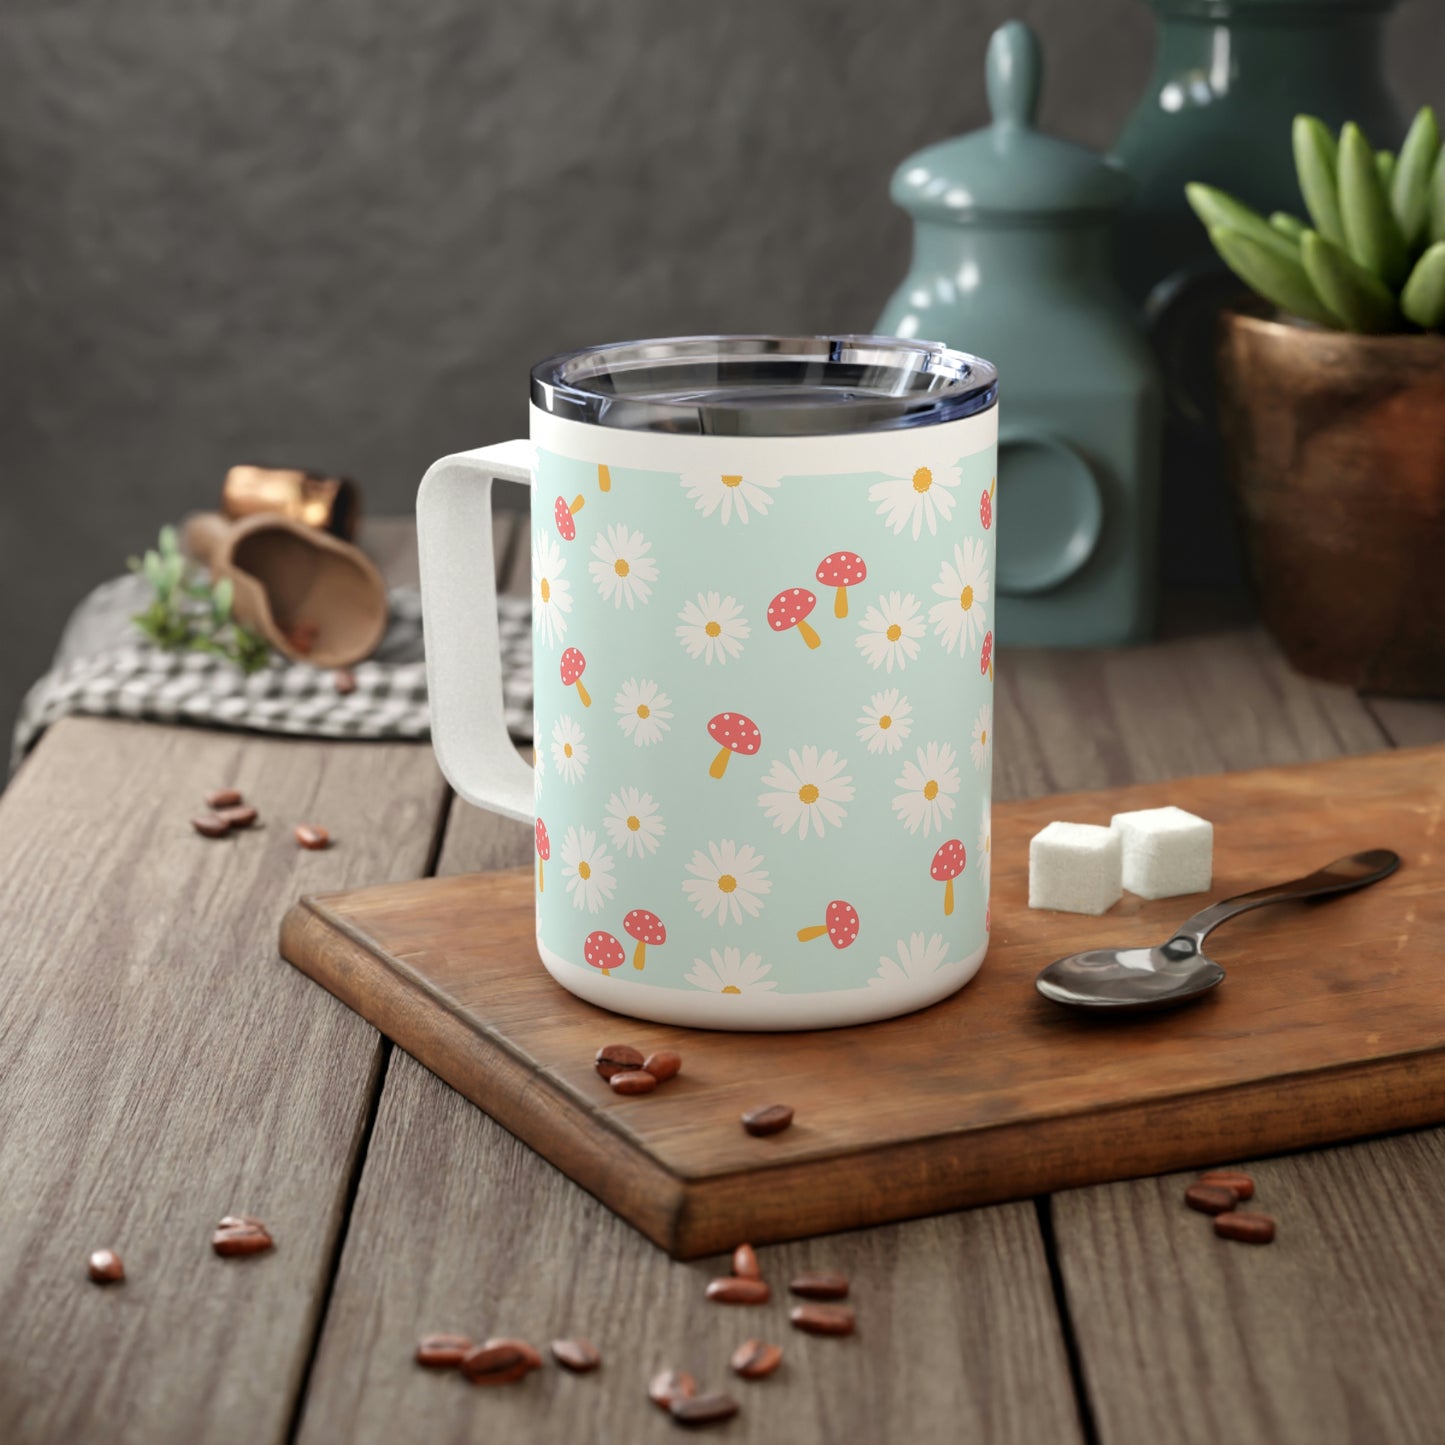 Daisies and Mushrooms Insulated Coffee Mug, 10oz